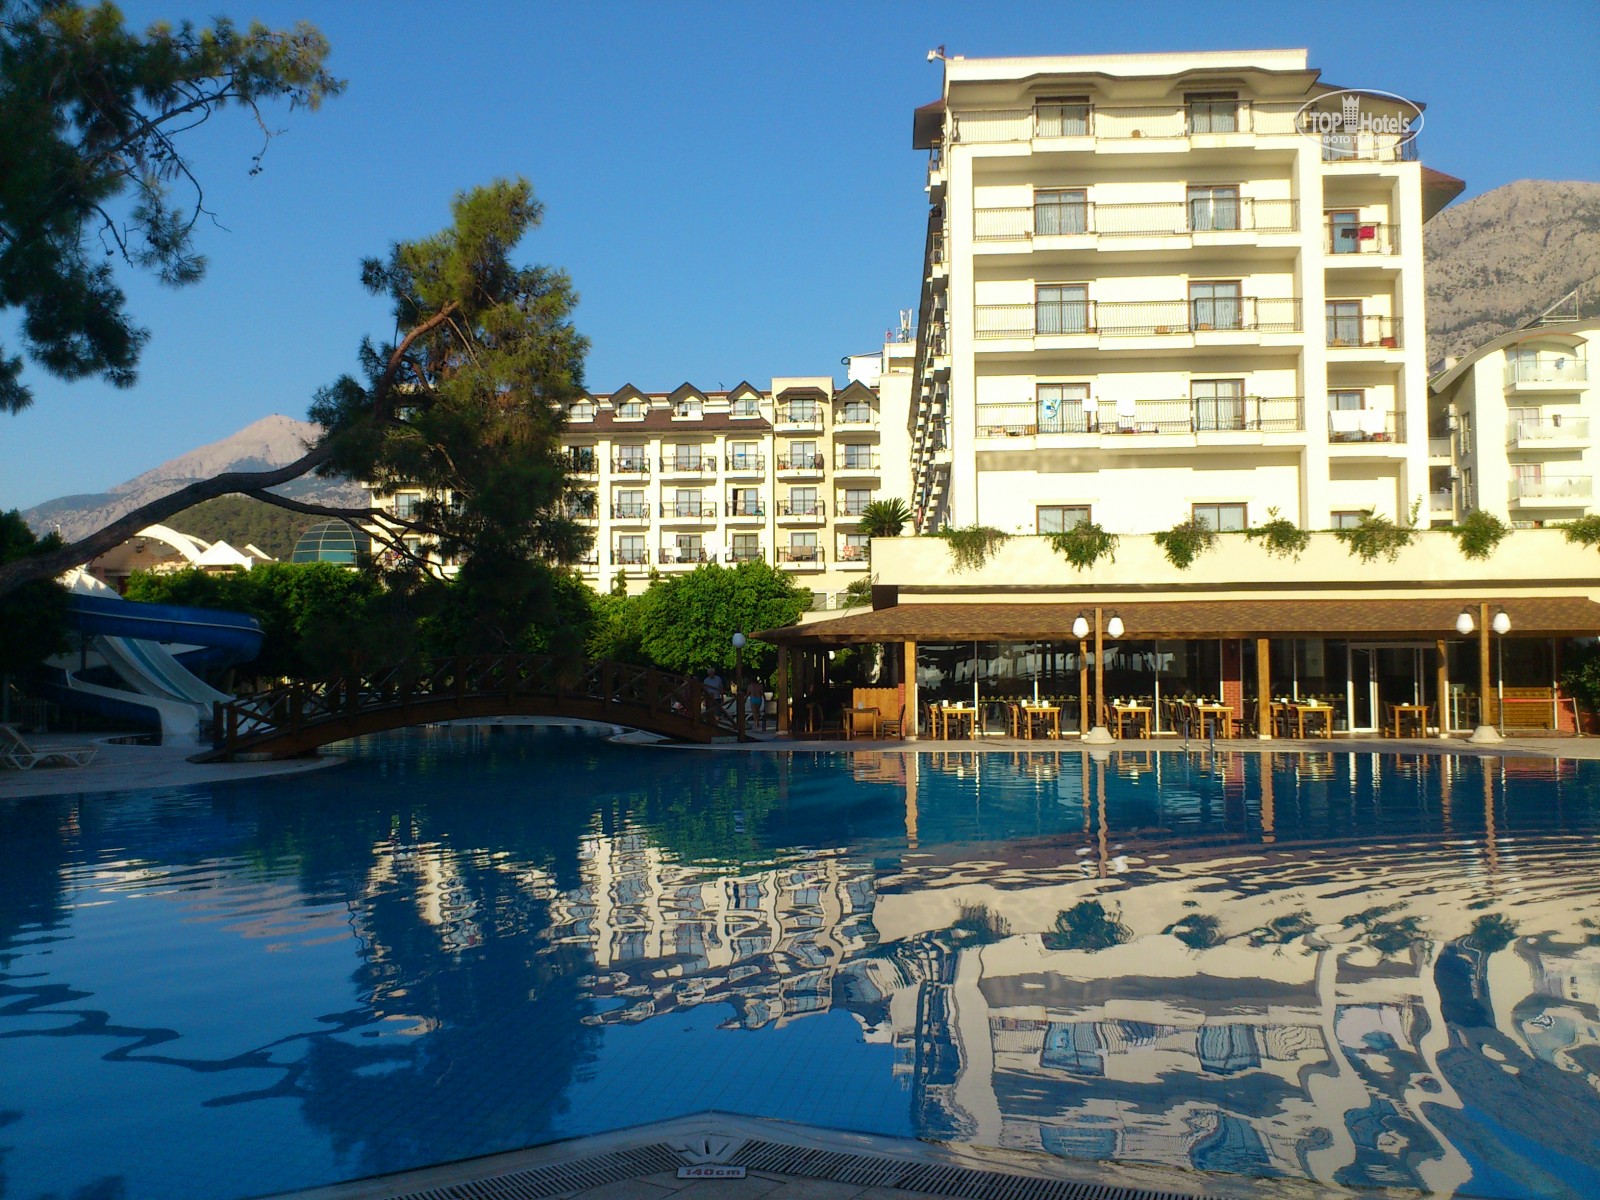 Відгуки про готелі Palmet Beach Resort (ex. Sentido Palmet Beach)